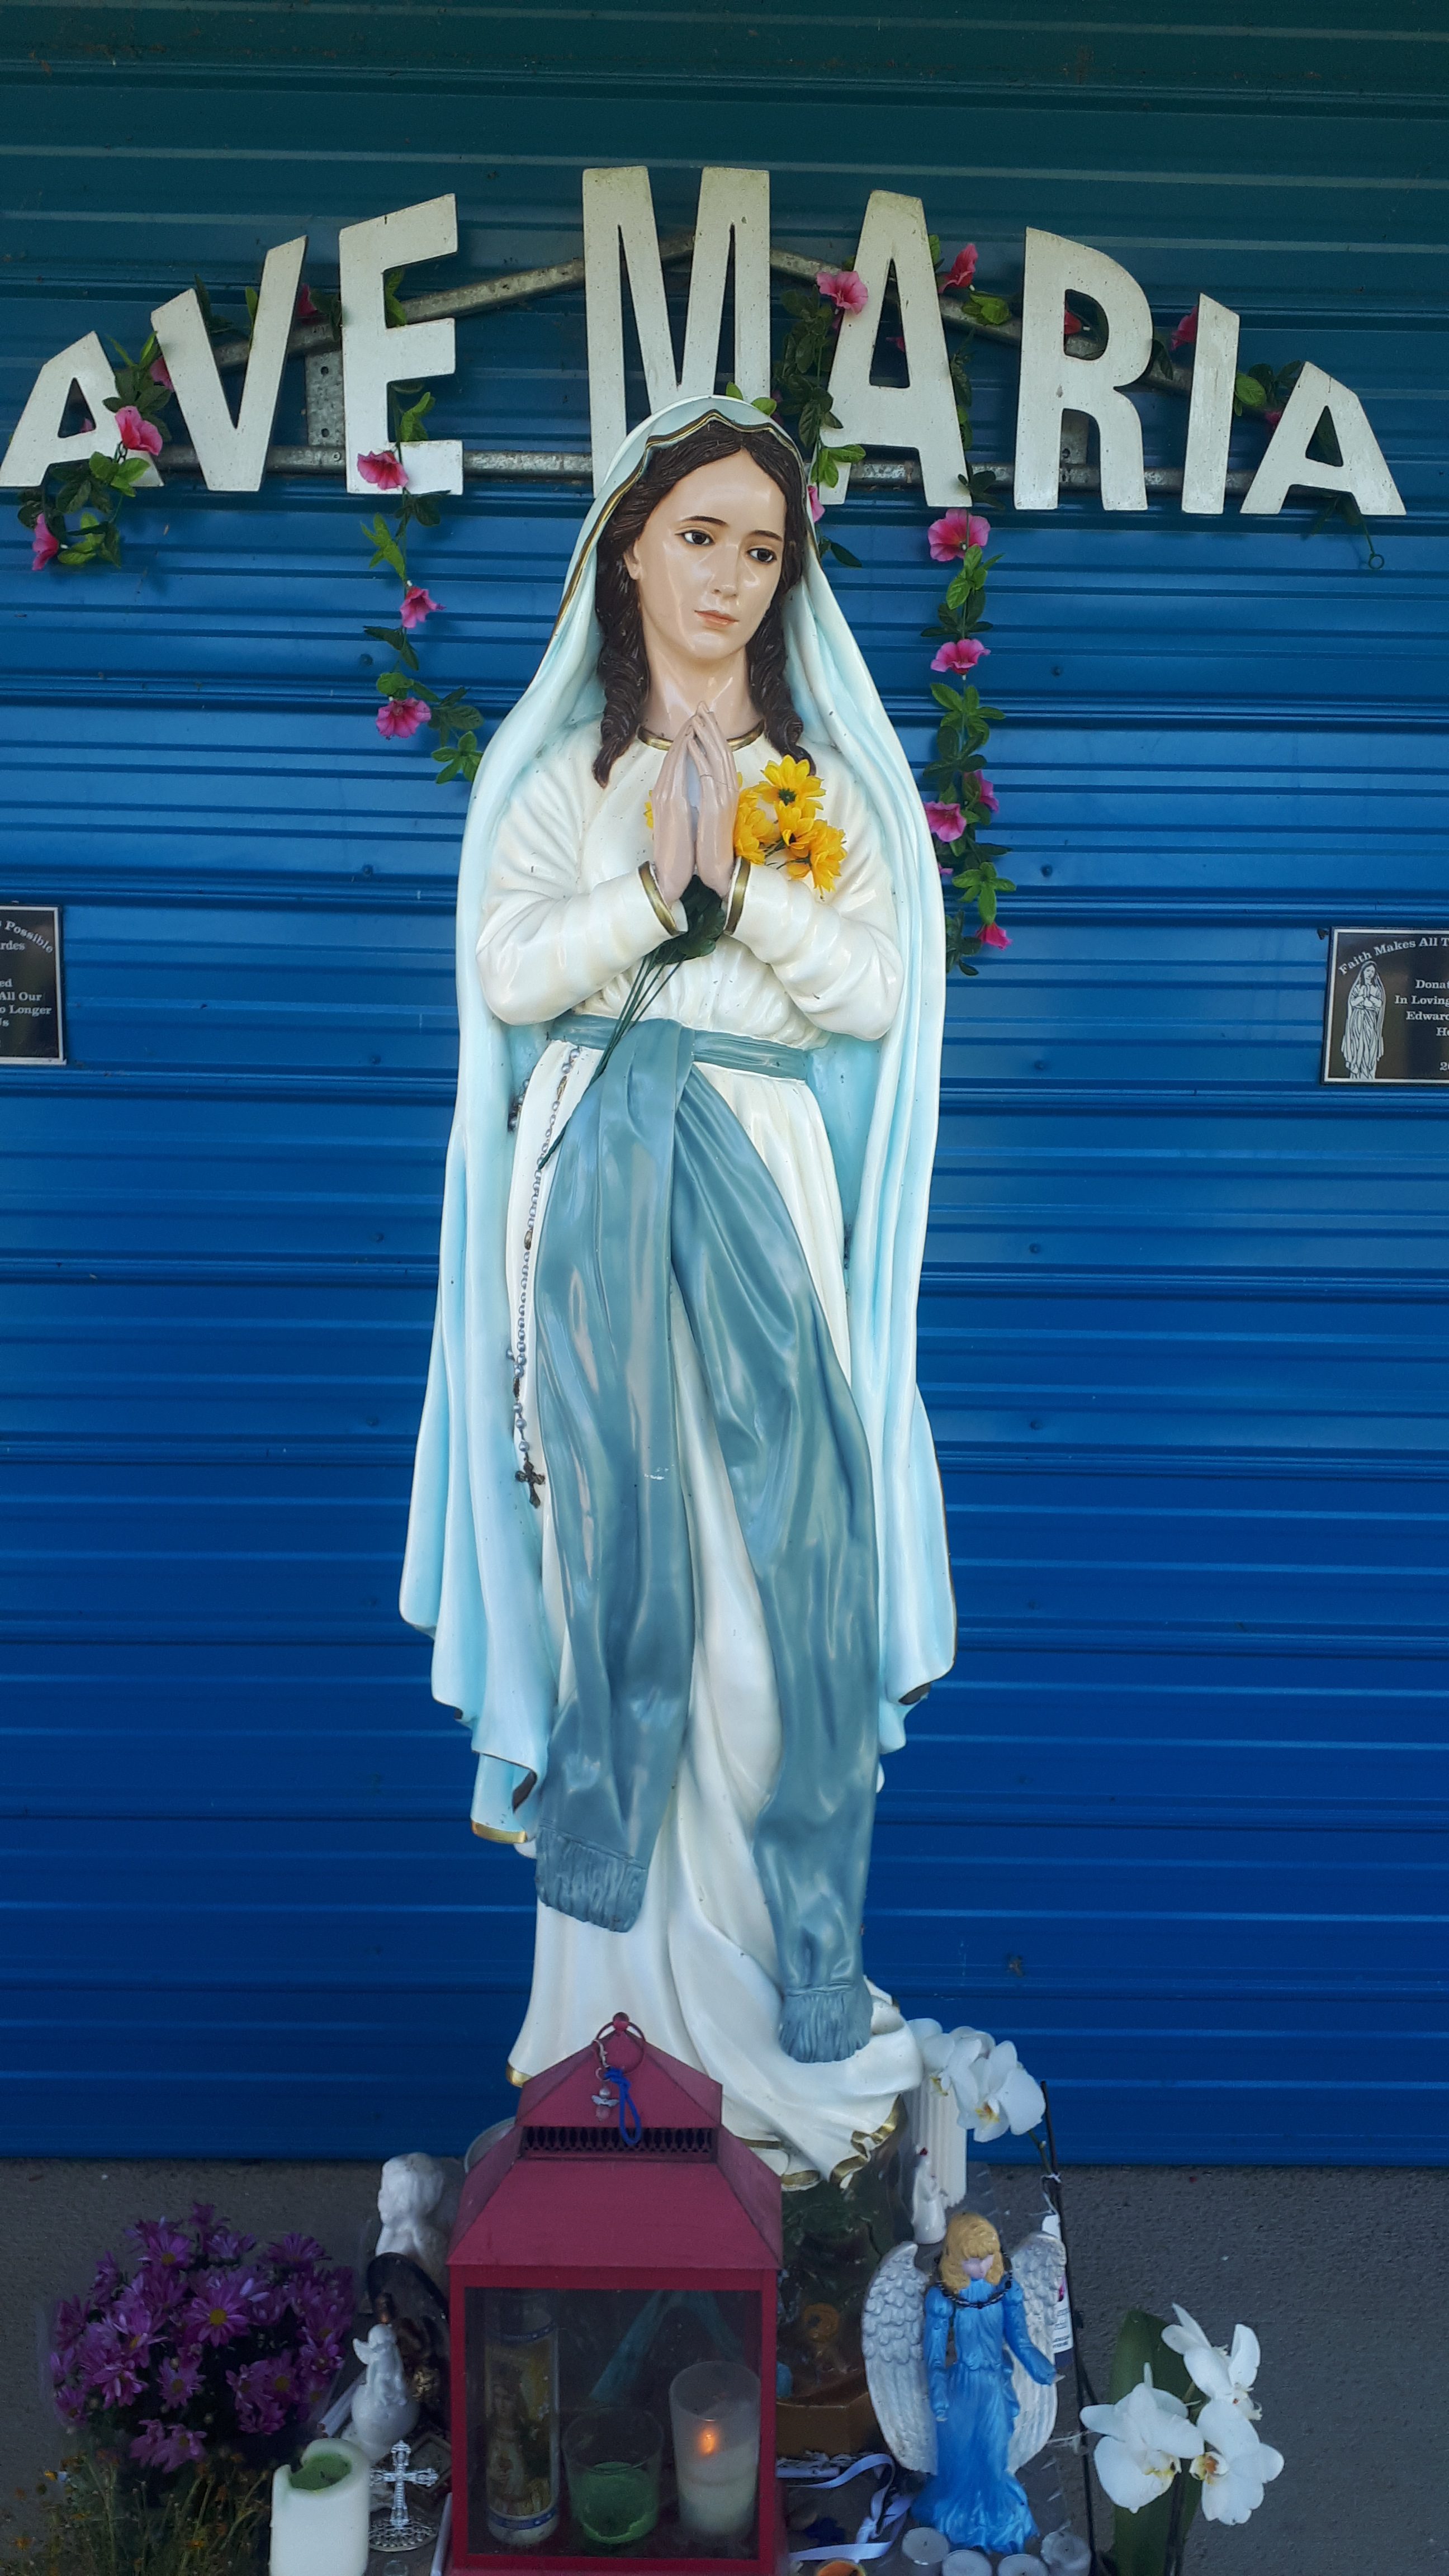 A shrine to Our Lady of Lourdes in Saskatchewan Image